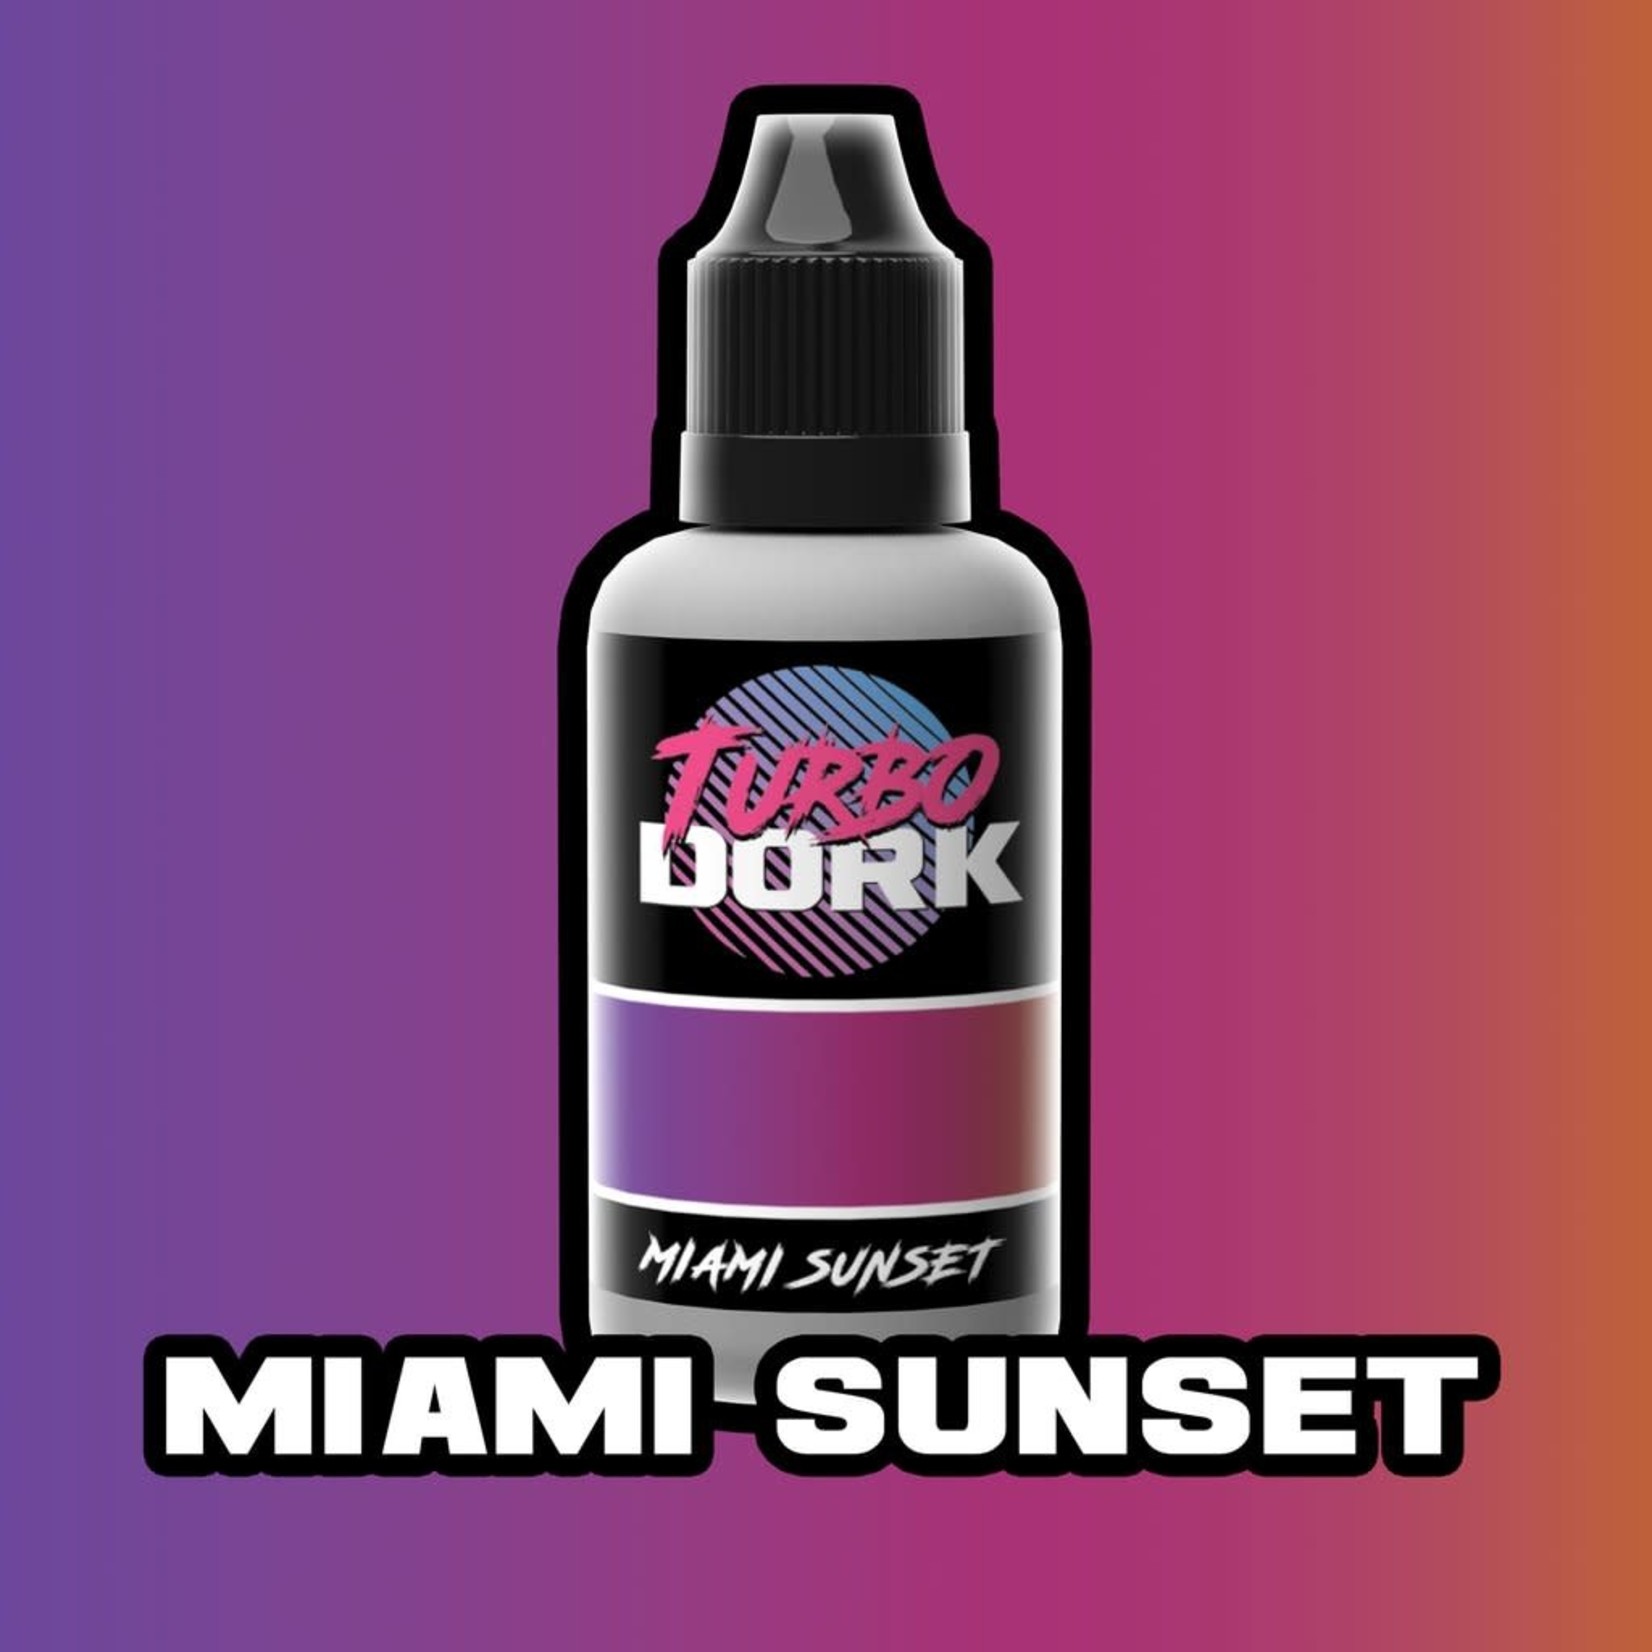 Turbo Dork Miami Sunset Colorshift Acrylic Paint 20ml Bottle